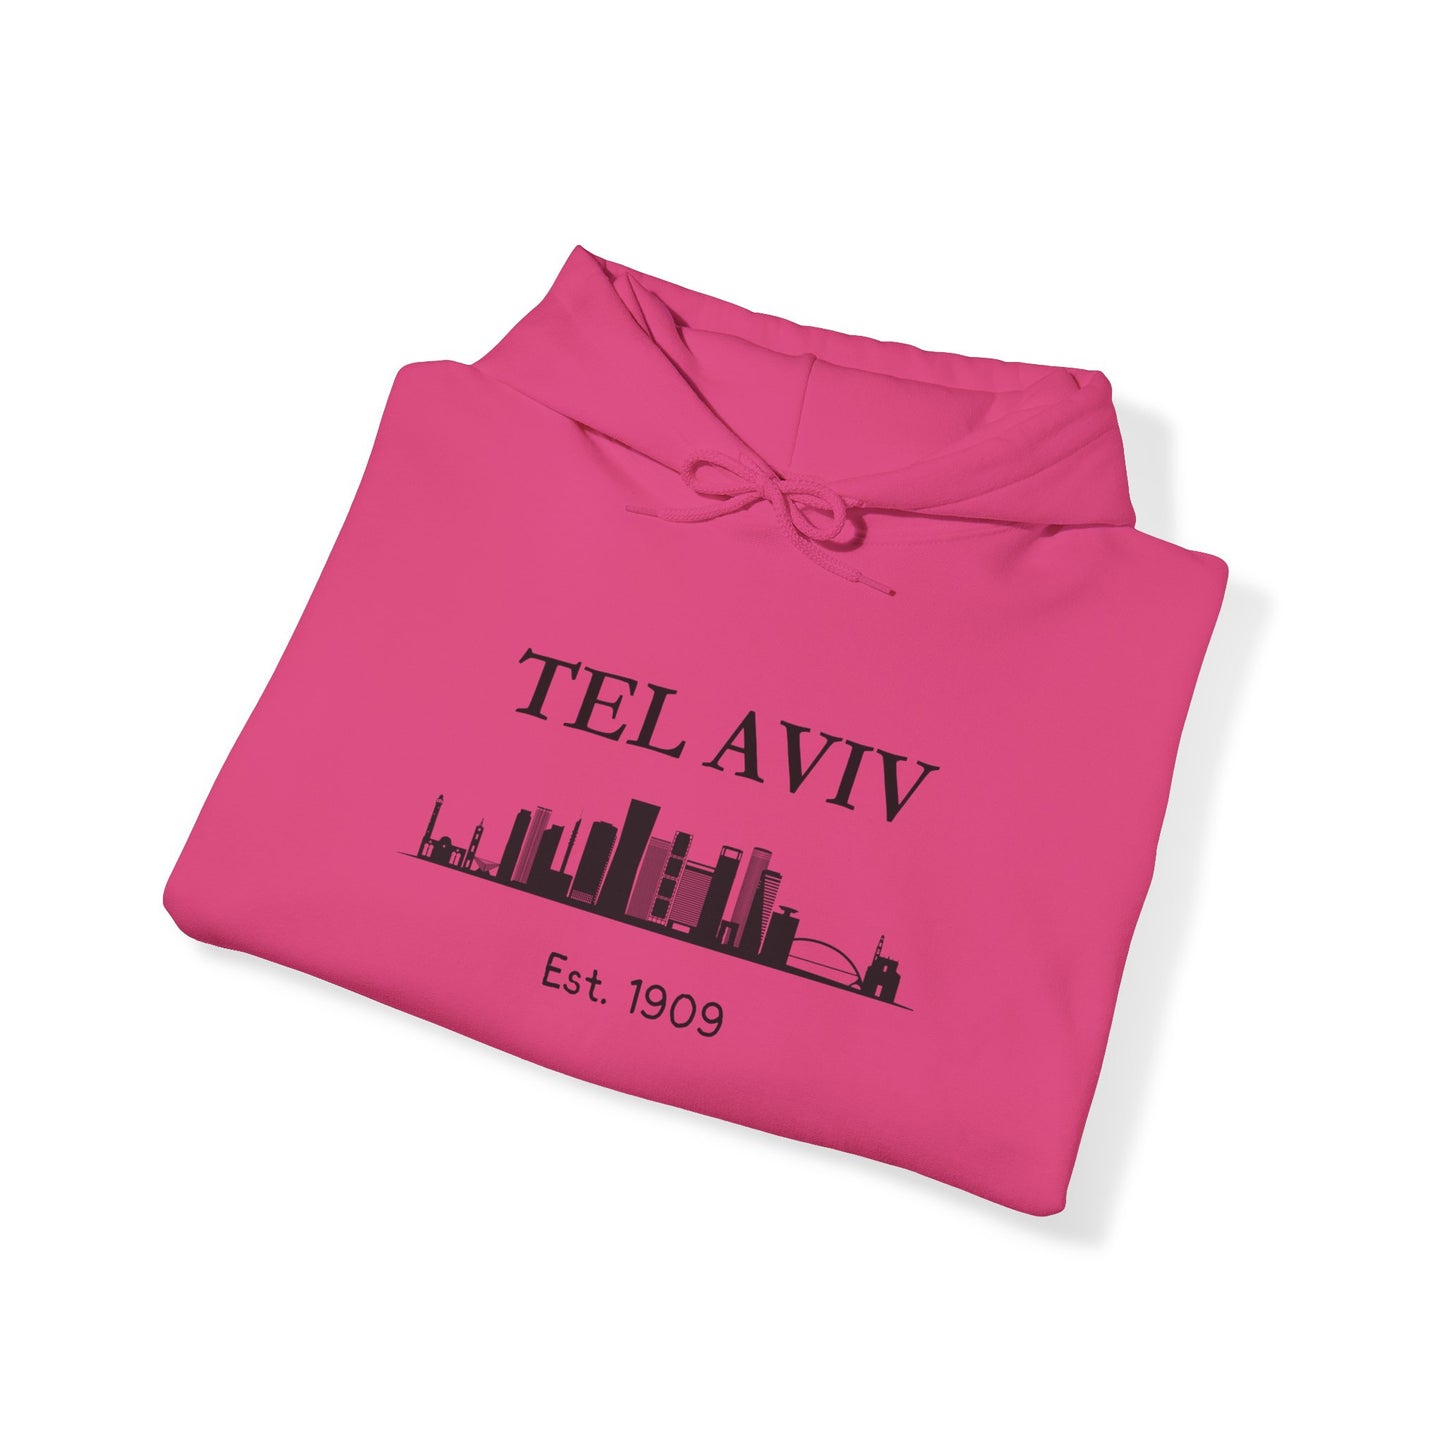 Tel Aviv Hooded Sweatshirt